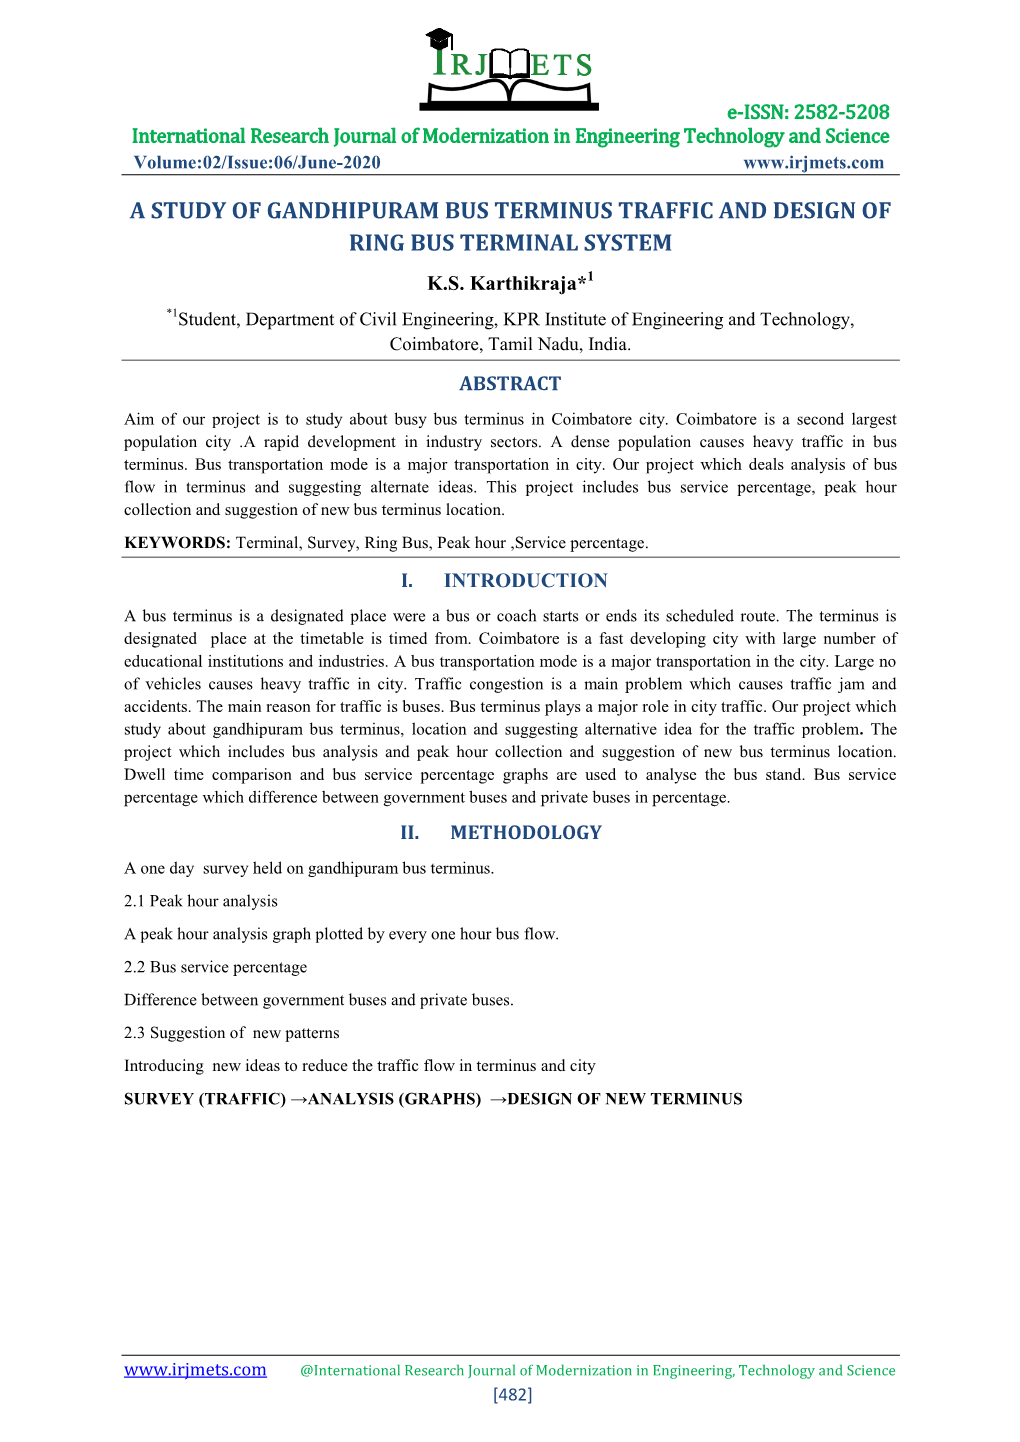 A Study of Gandhipuram Bus Terminus Traffic and Design of Ring Bus Terminal System K.S